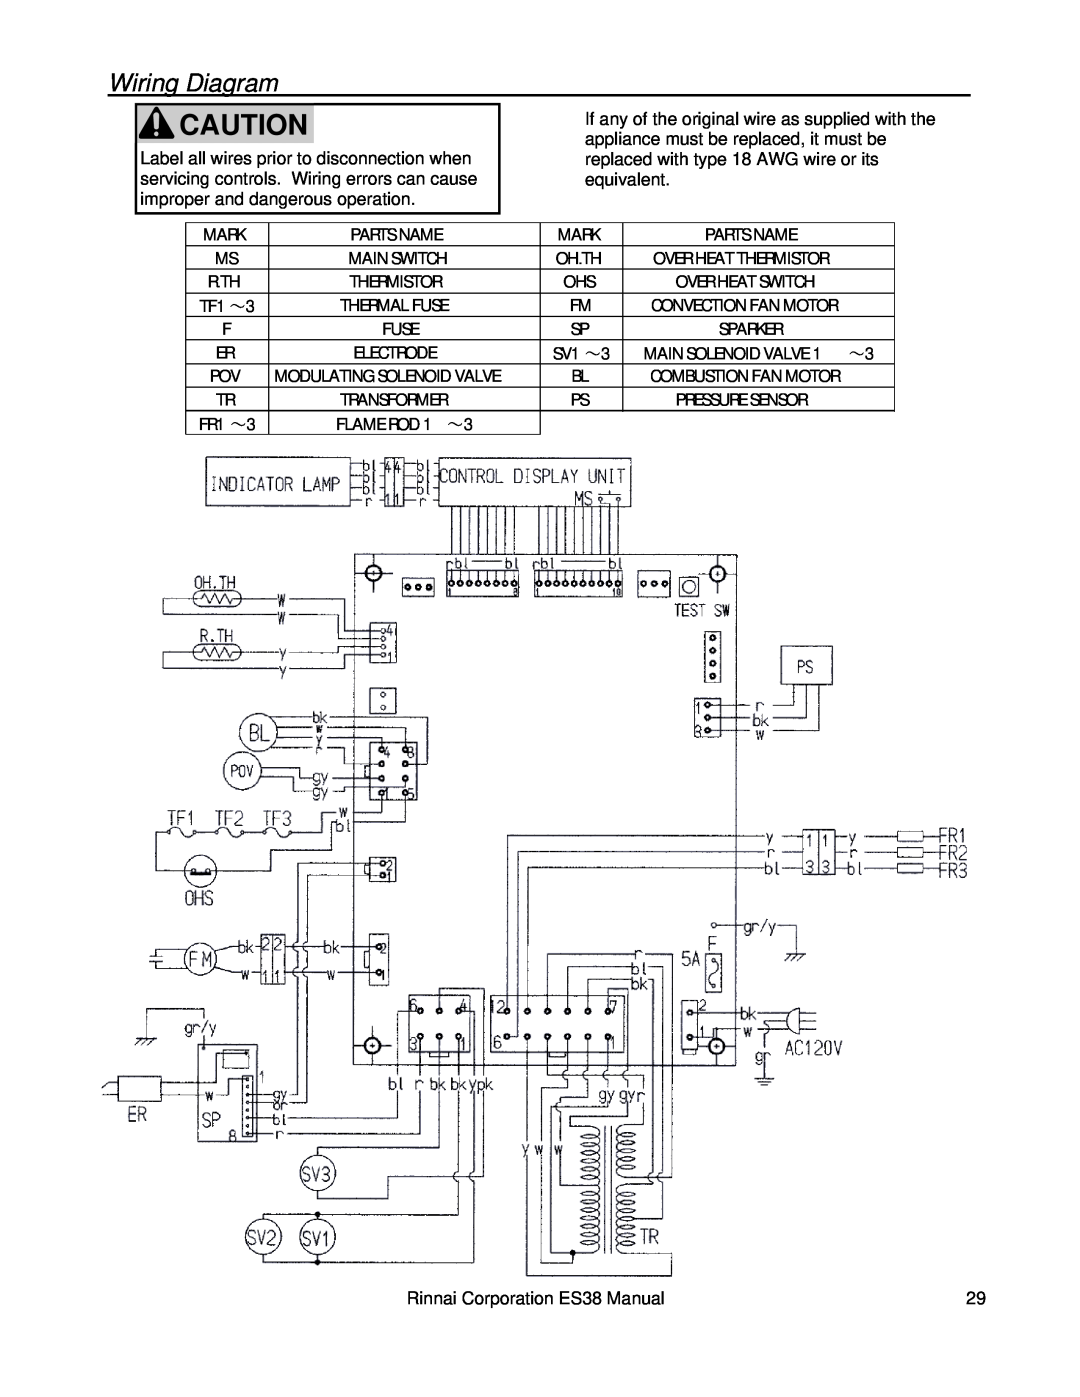 Rinnai ES38 installation manual Wiring Diagram 